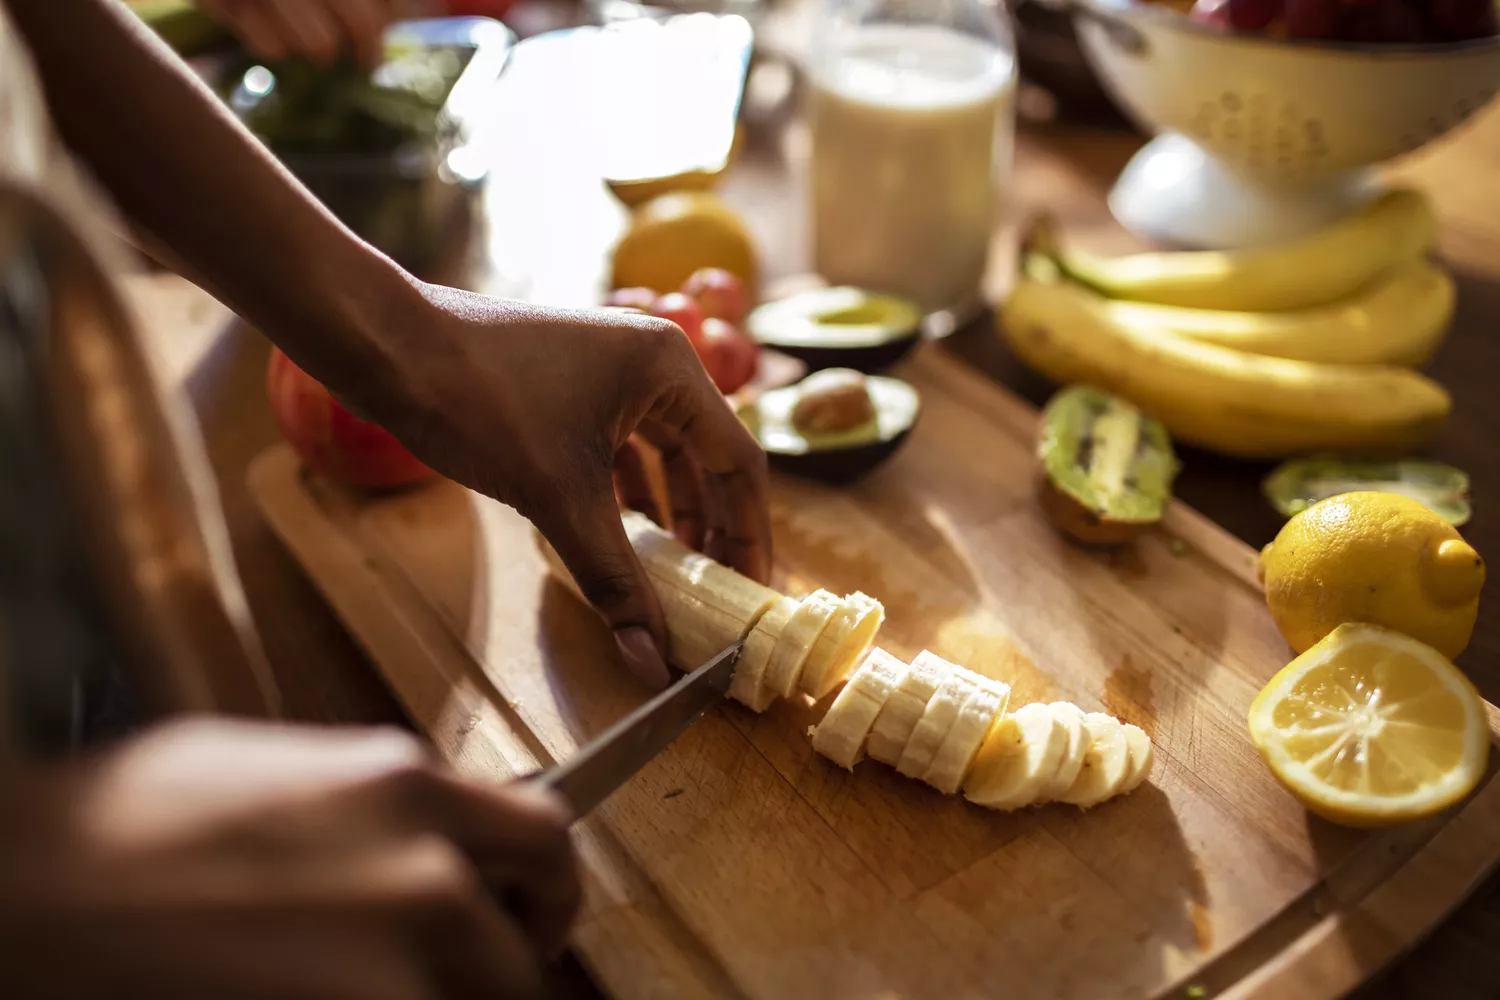 A person cutting bananas on a cutting board